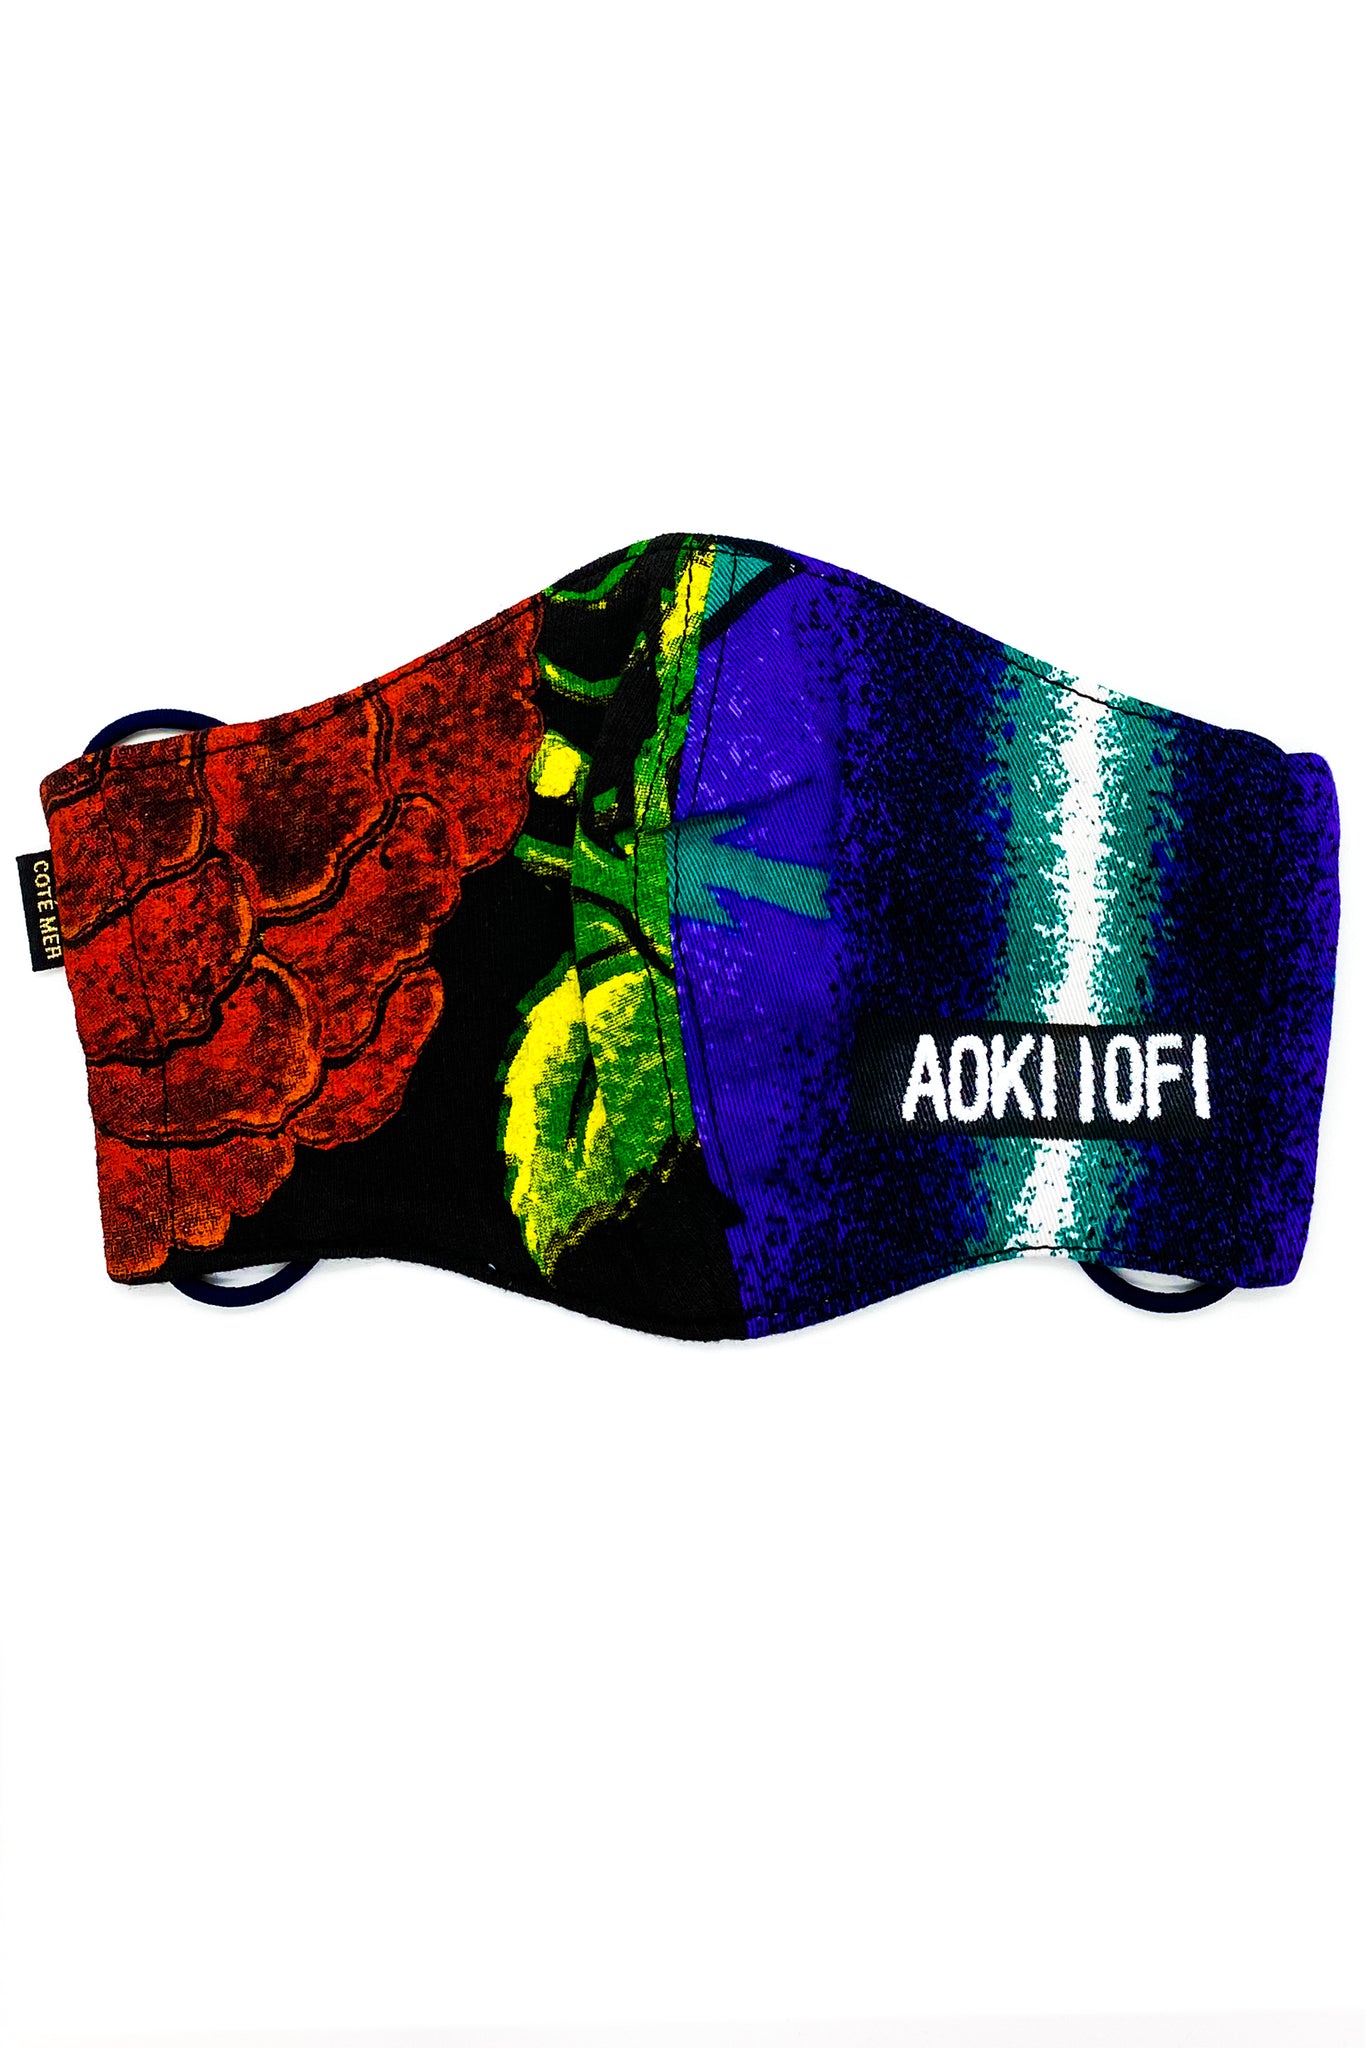 Aoki 1 of 1 Mask #326